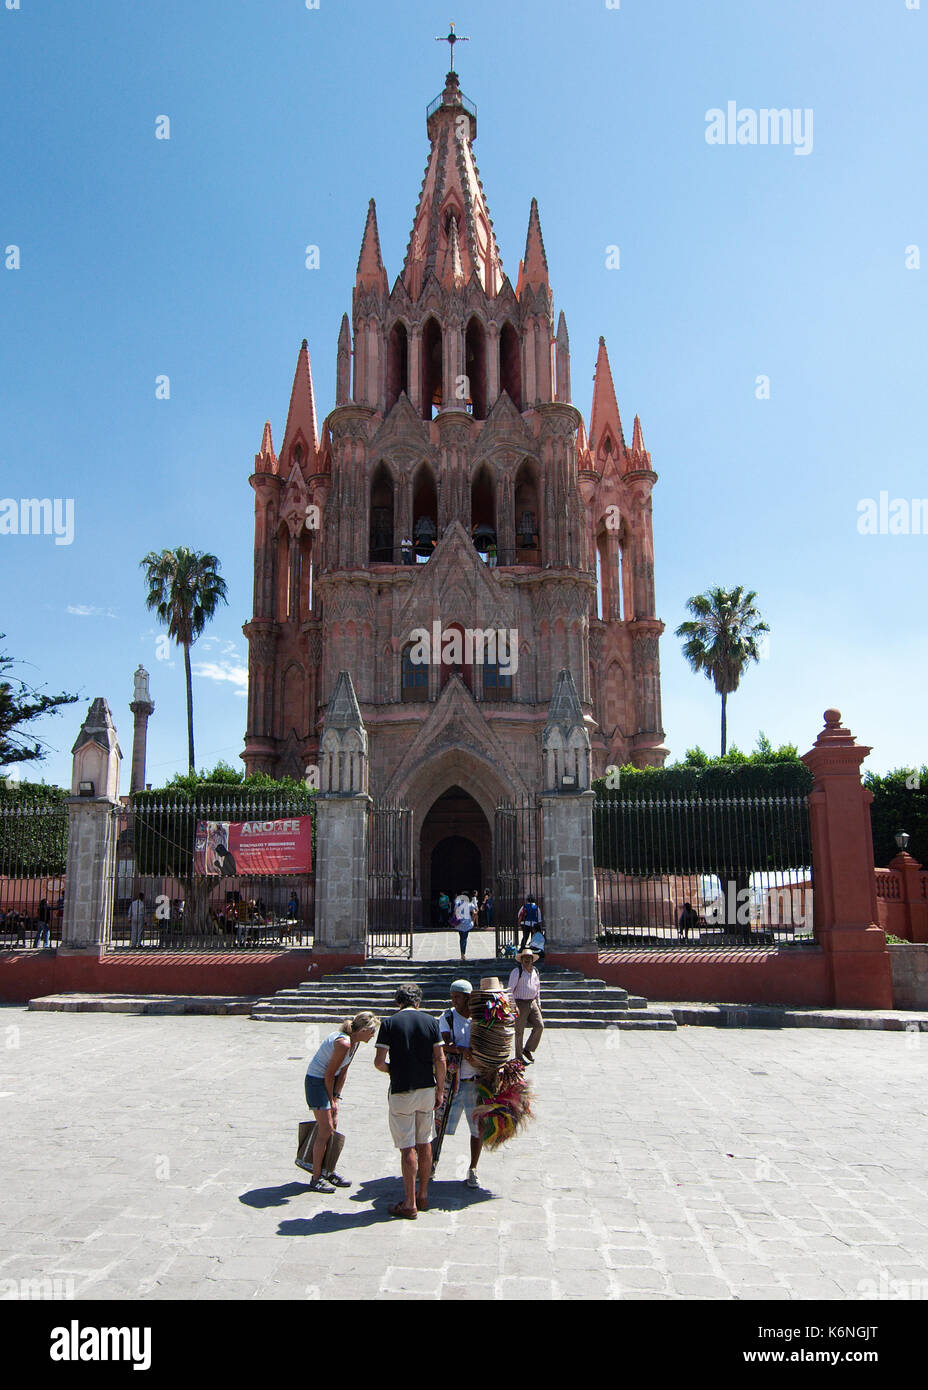 San Miguel de Allende, Guanajuato, Mexiko - 2013: La Parroquia de San Miguel Arcángel ist eine neugotische Kirche am Zocalo der Stadt. Stockfoto